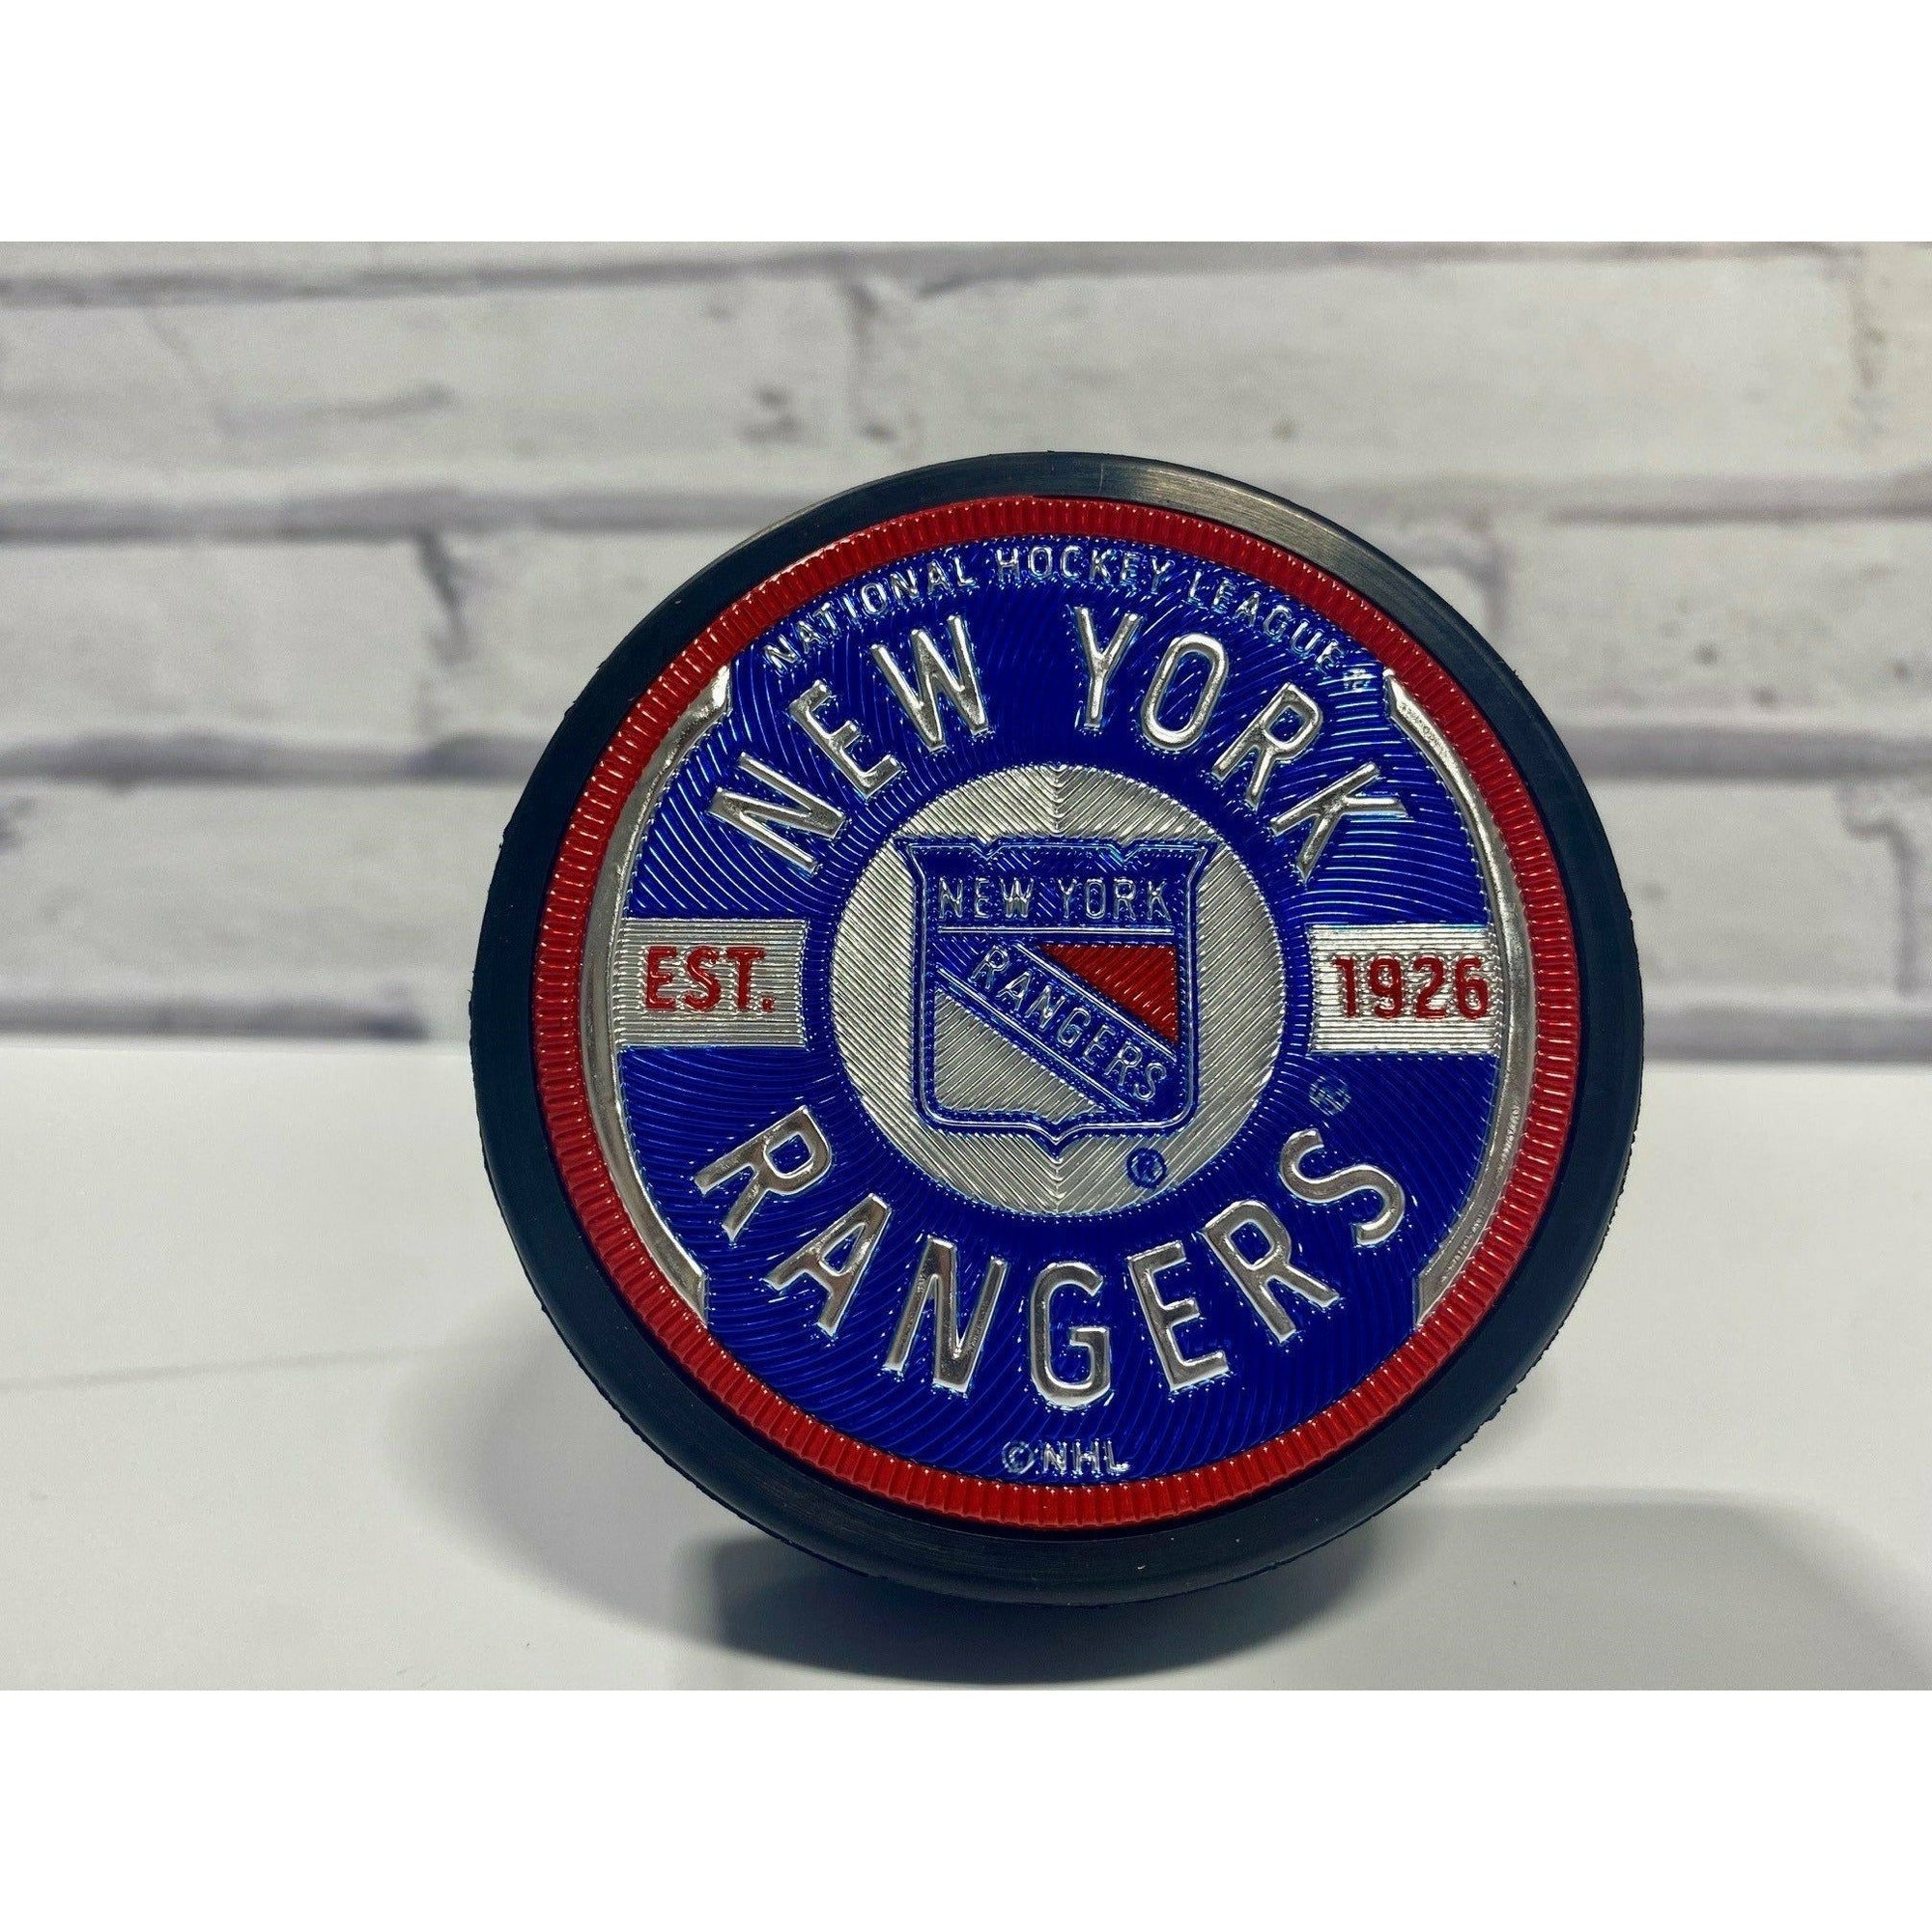 New York Rangers Aluminum Metal Key Ring - New York Teams Store